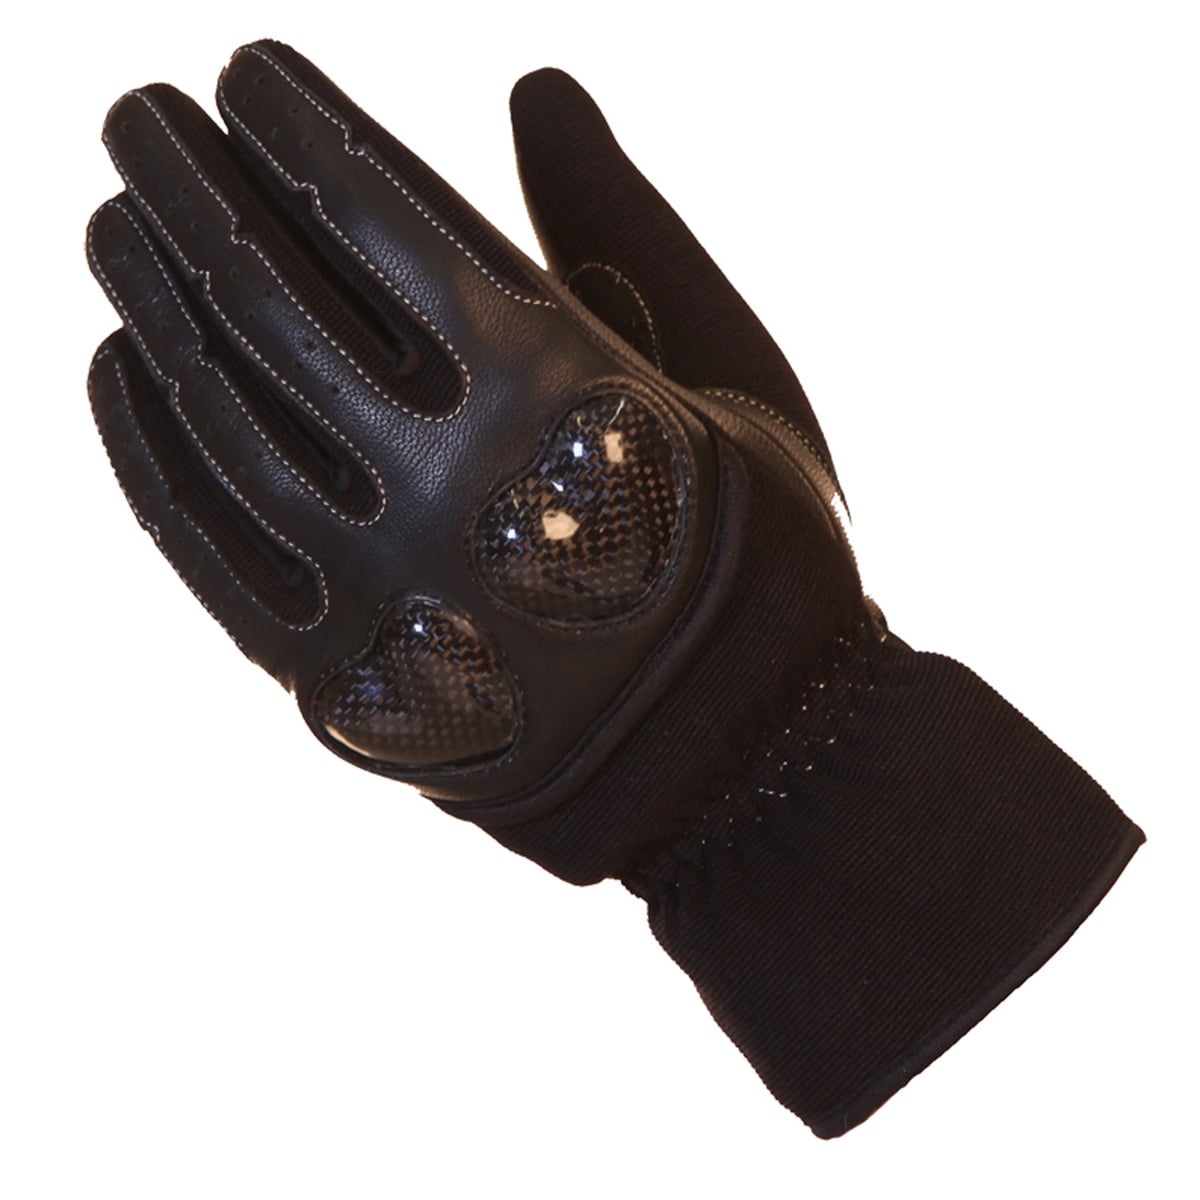 Perforated Cowhide Motorcycle Biker Riding Gloves Black G14 